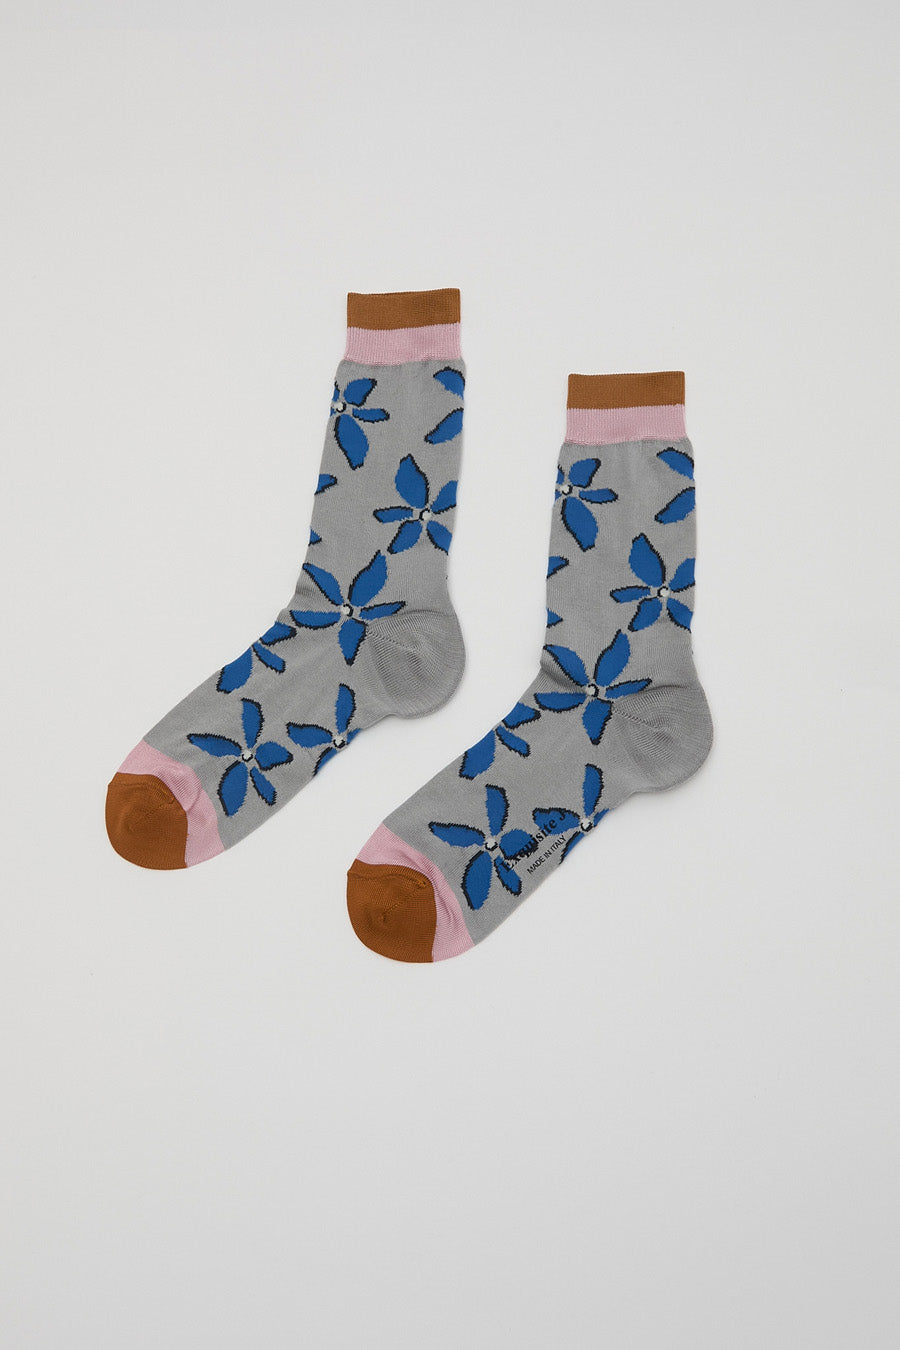 Exquisite J Graphic Flower Socks in Grey